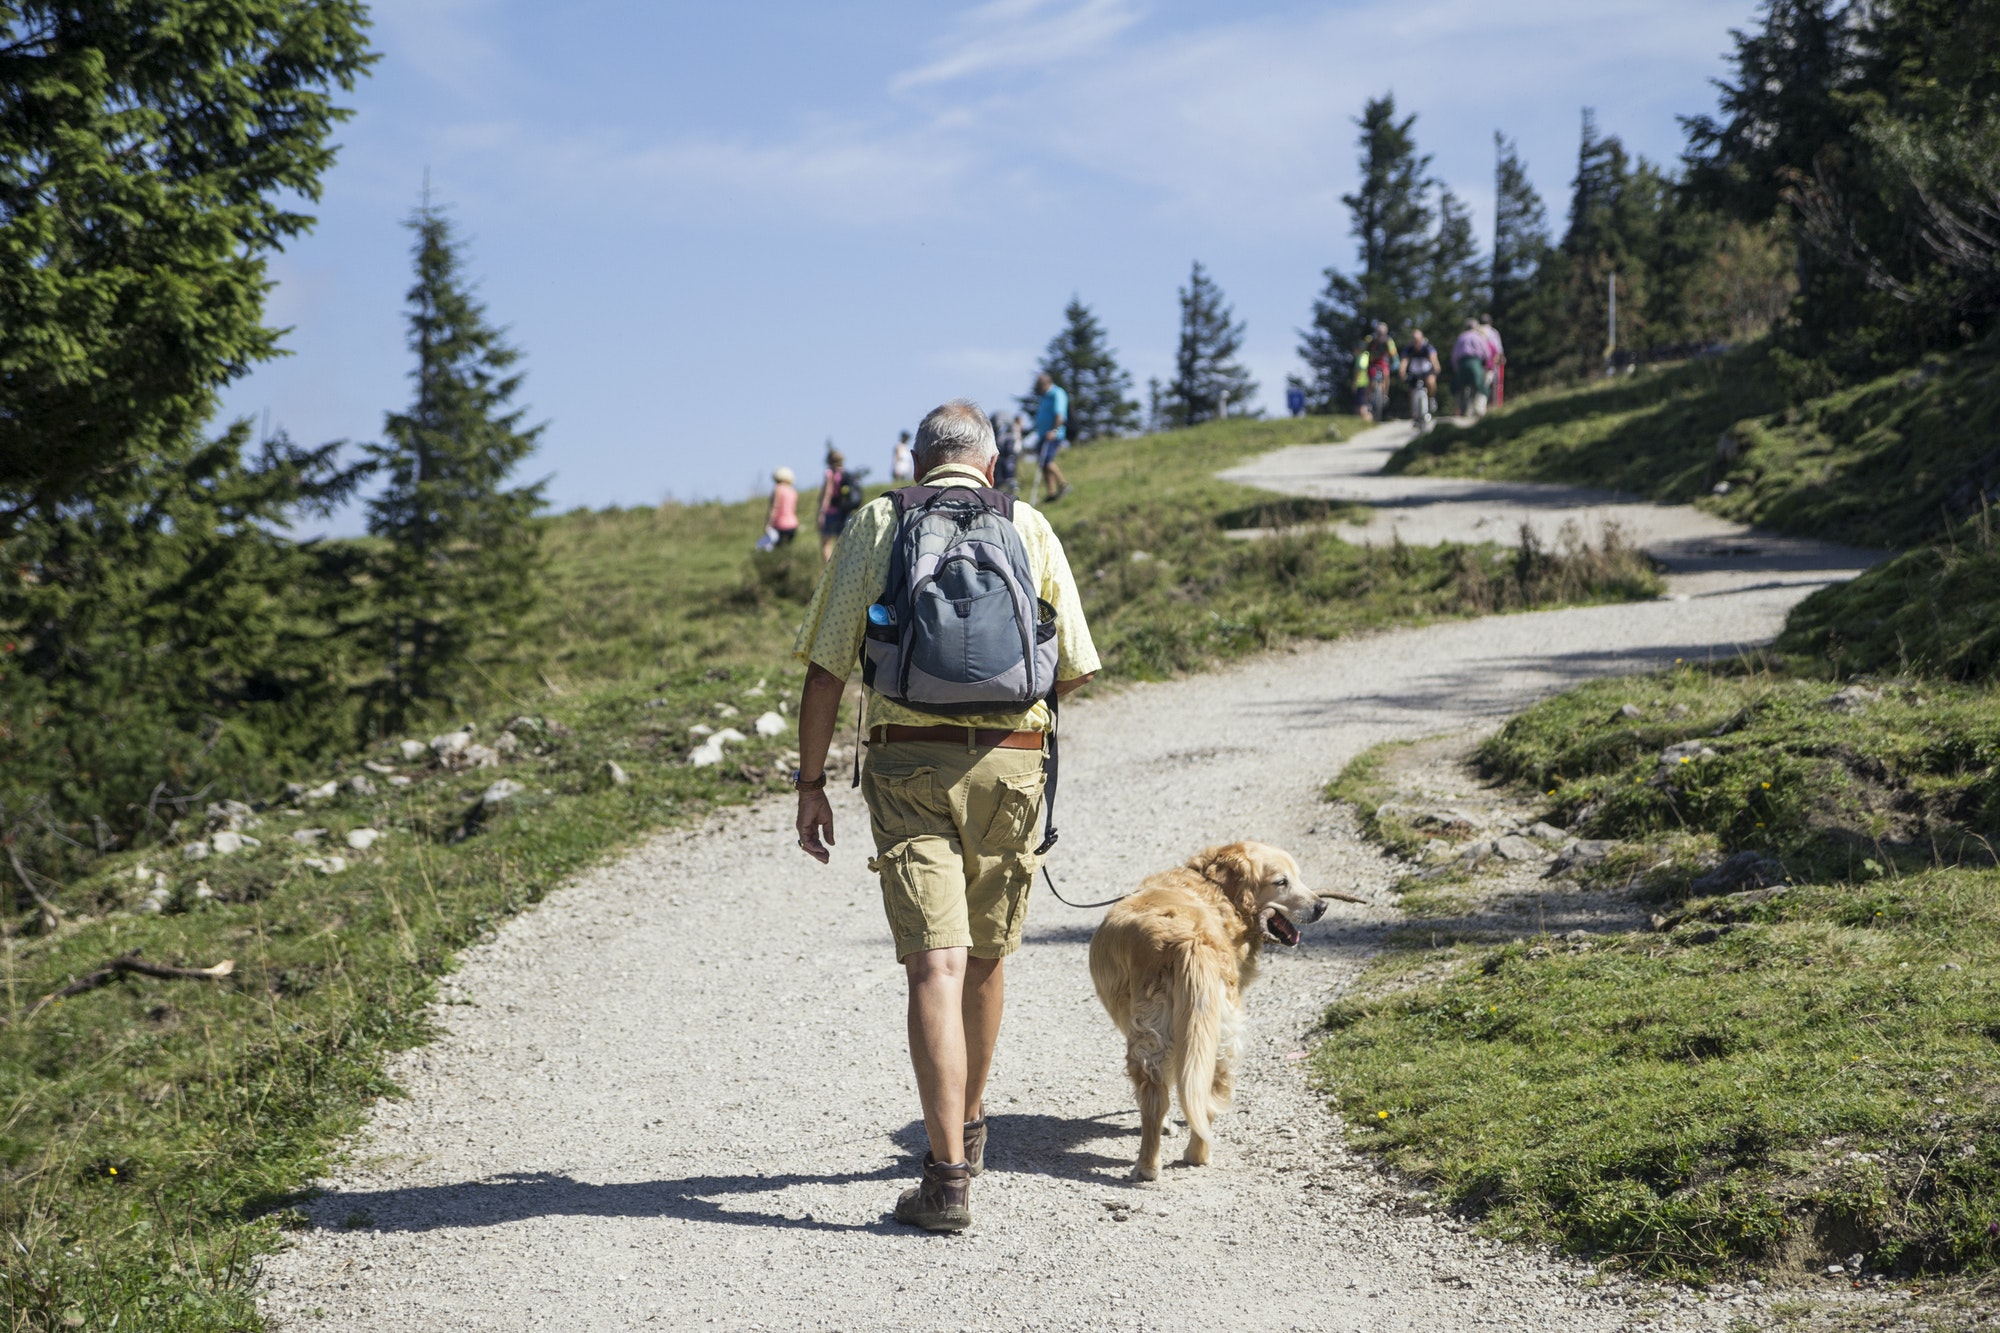 Germany, Bavaria, Chiemgau, Kampenwand, senior man hiking with Golden Retriever